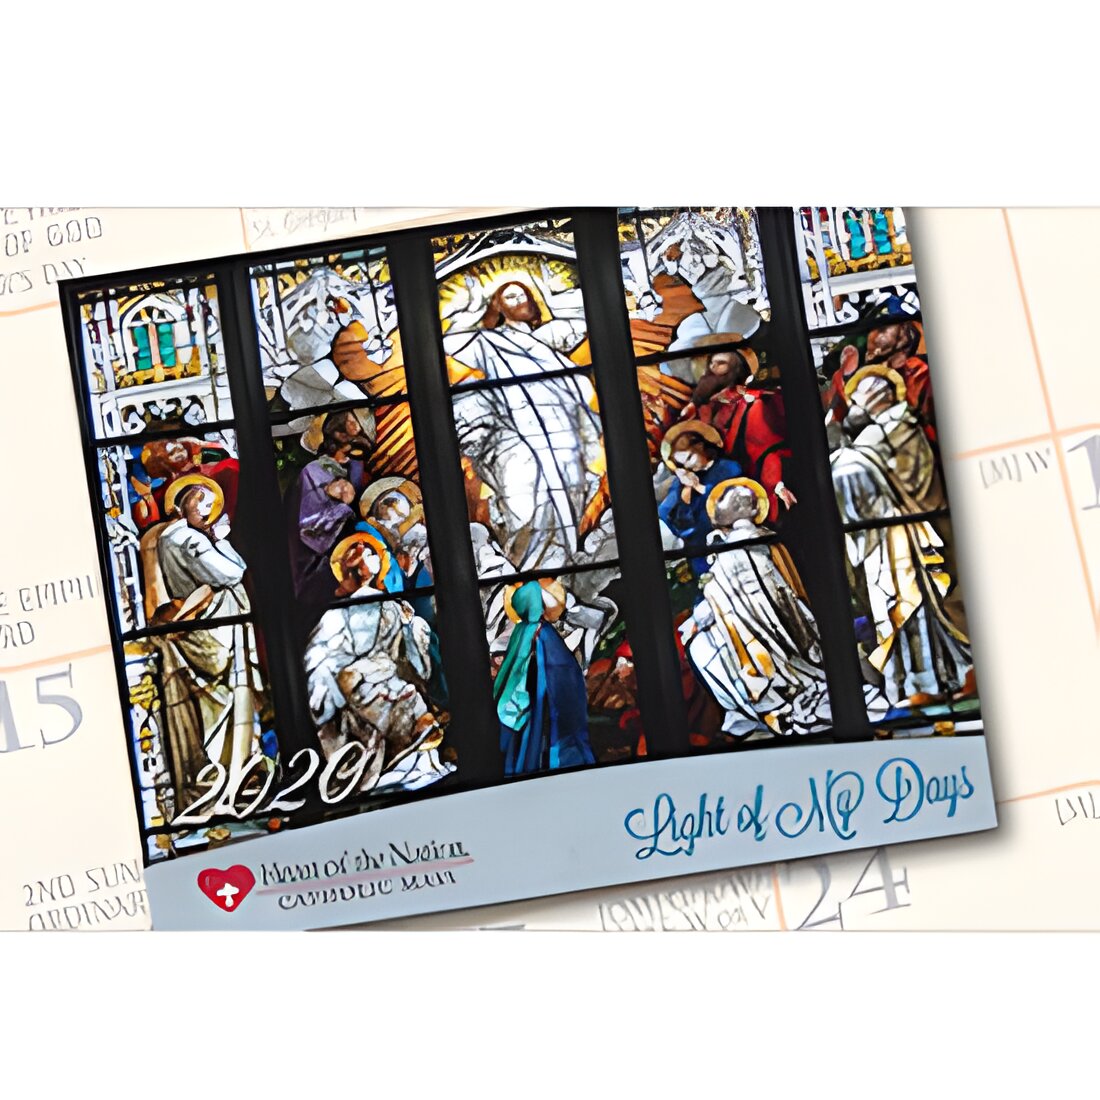 Free Heart of the Nation Catholic Mass 2020 Catholic Art Wall Calendar